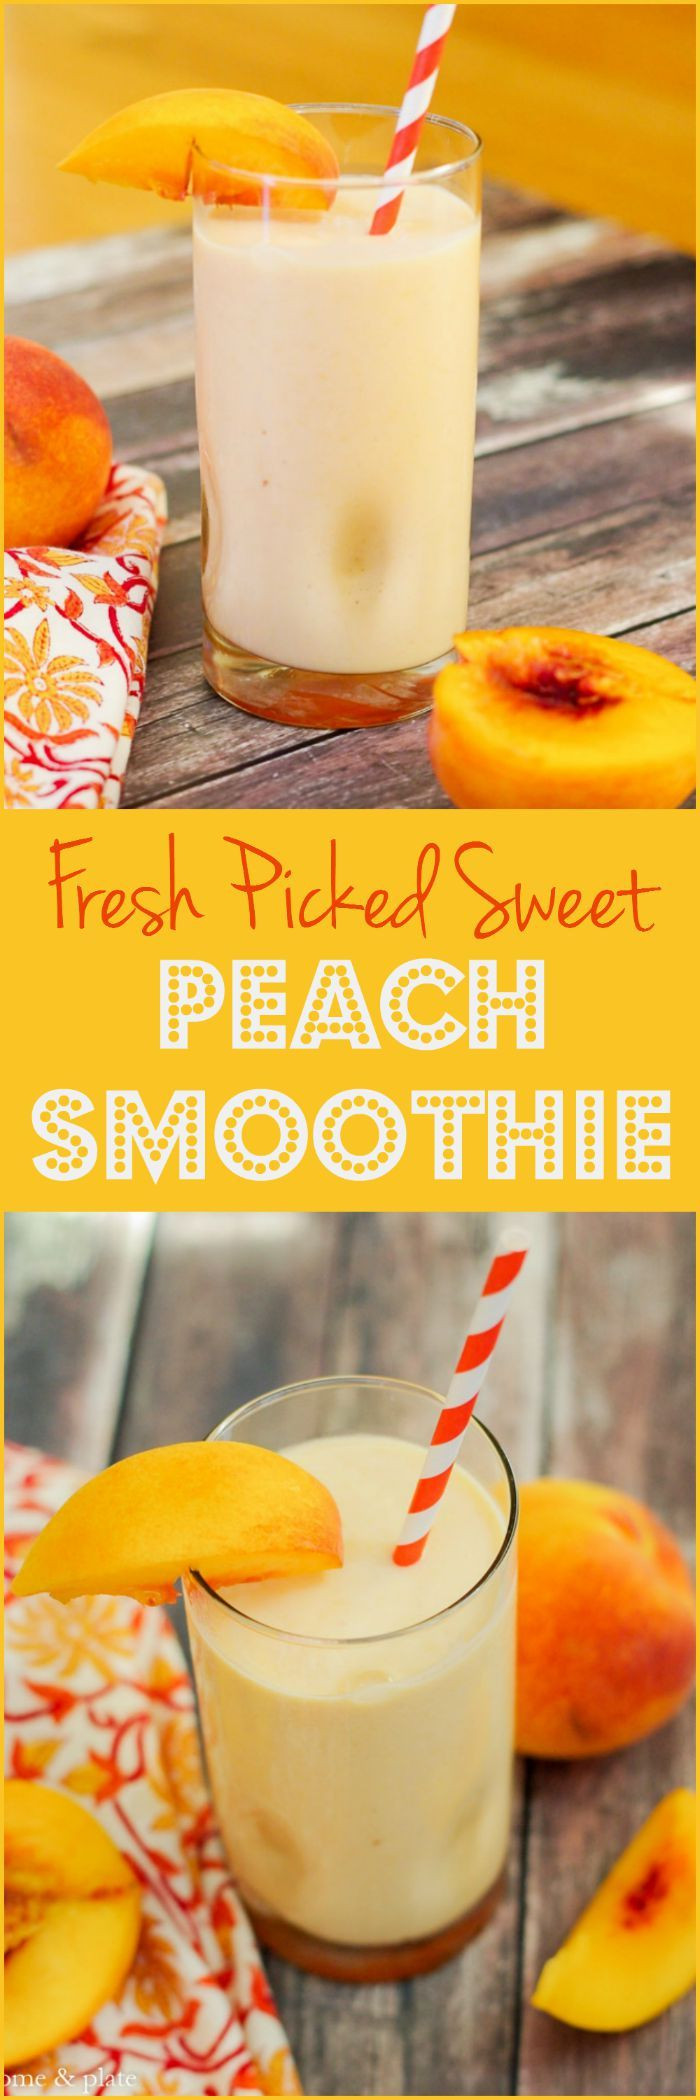 Sweet Smoothies Recipes
 Banana Peach Smoothie Recipe